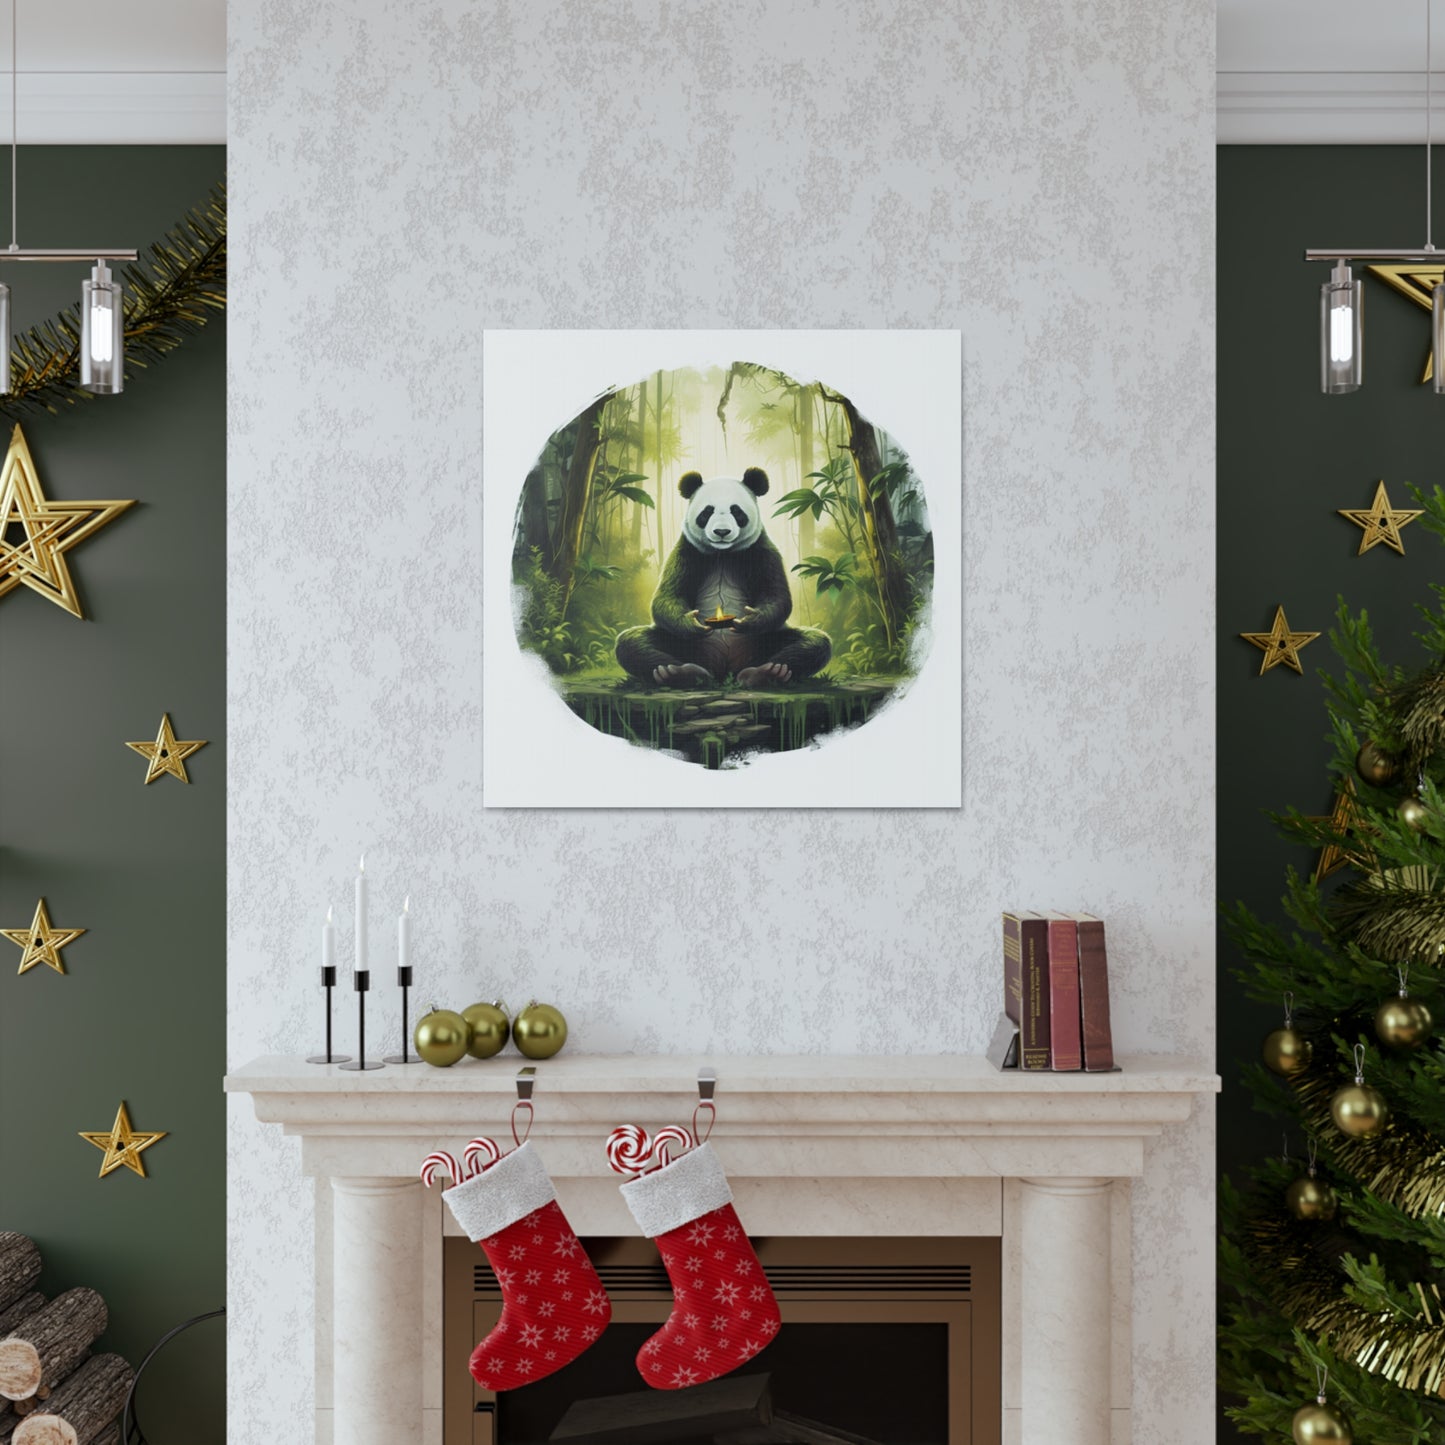 Canvas Gallery Wraps: Panda Print with a Panda Doing Yoga Pose